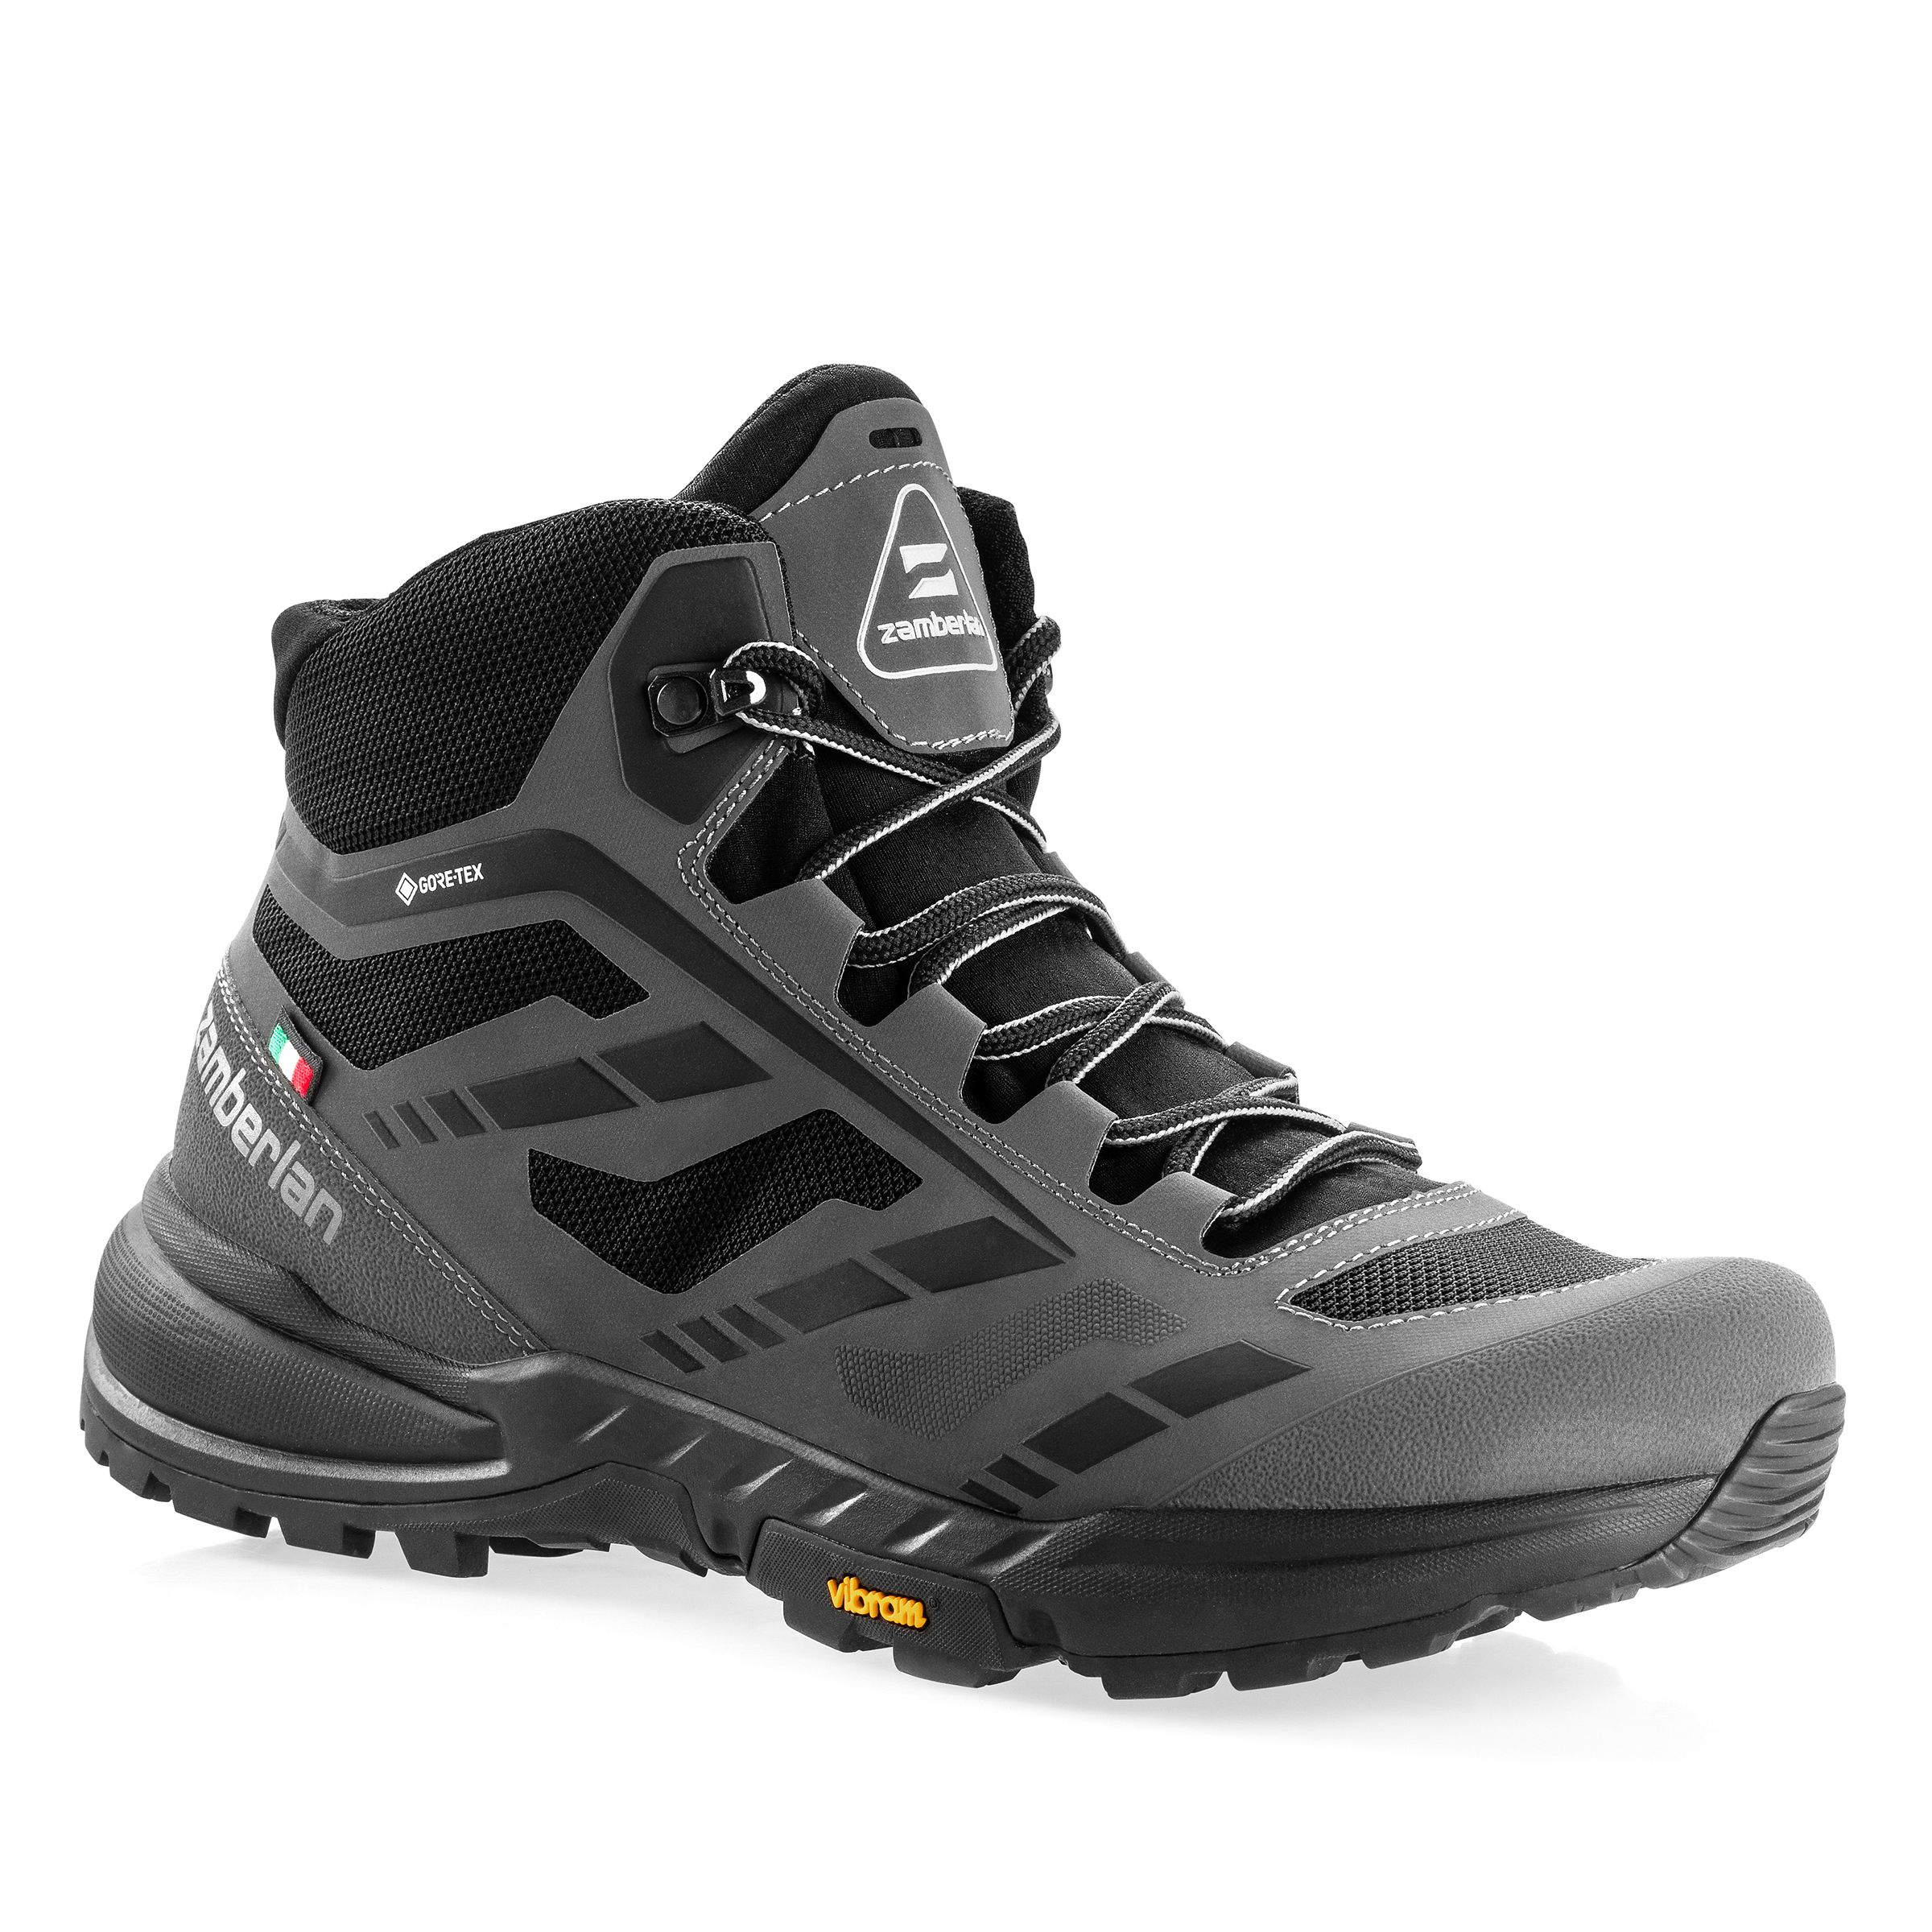 Zamberlan 219 Anabasis GTX Waterproof Mid Hiking Boots for Men - Grey - 9M